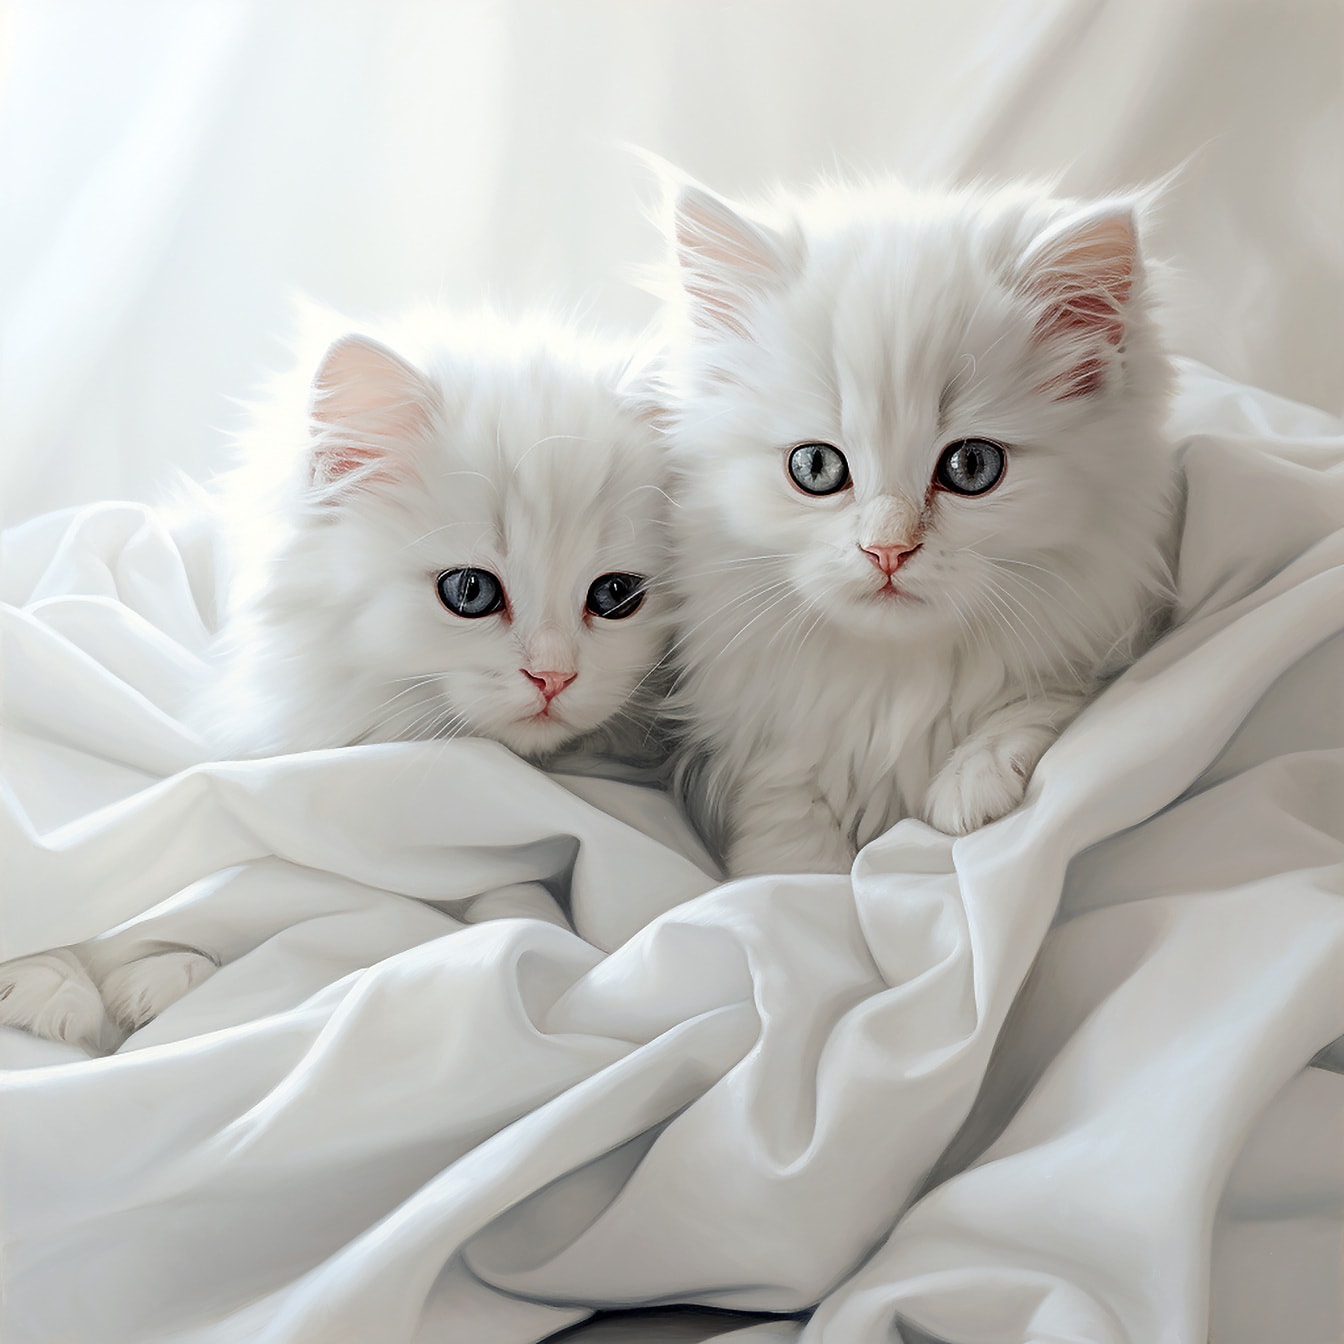 Adorabili gattini pelosi in tela di seta bianca fotografia in studio